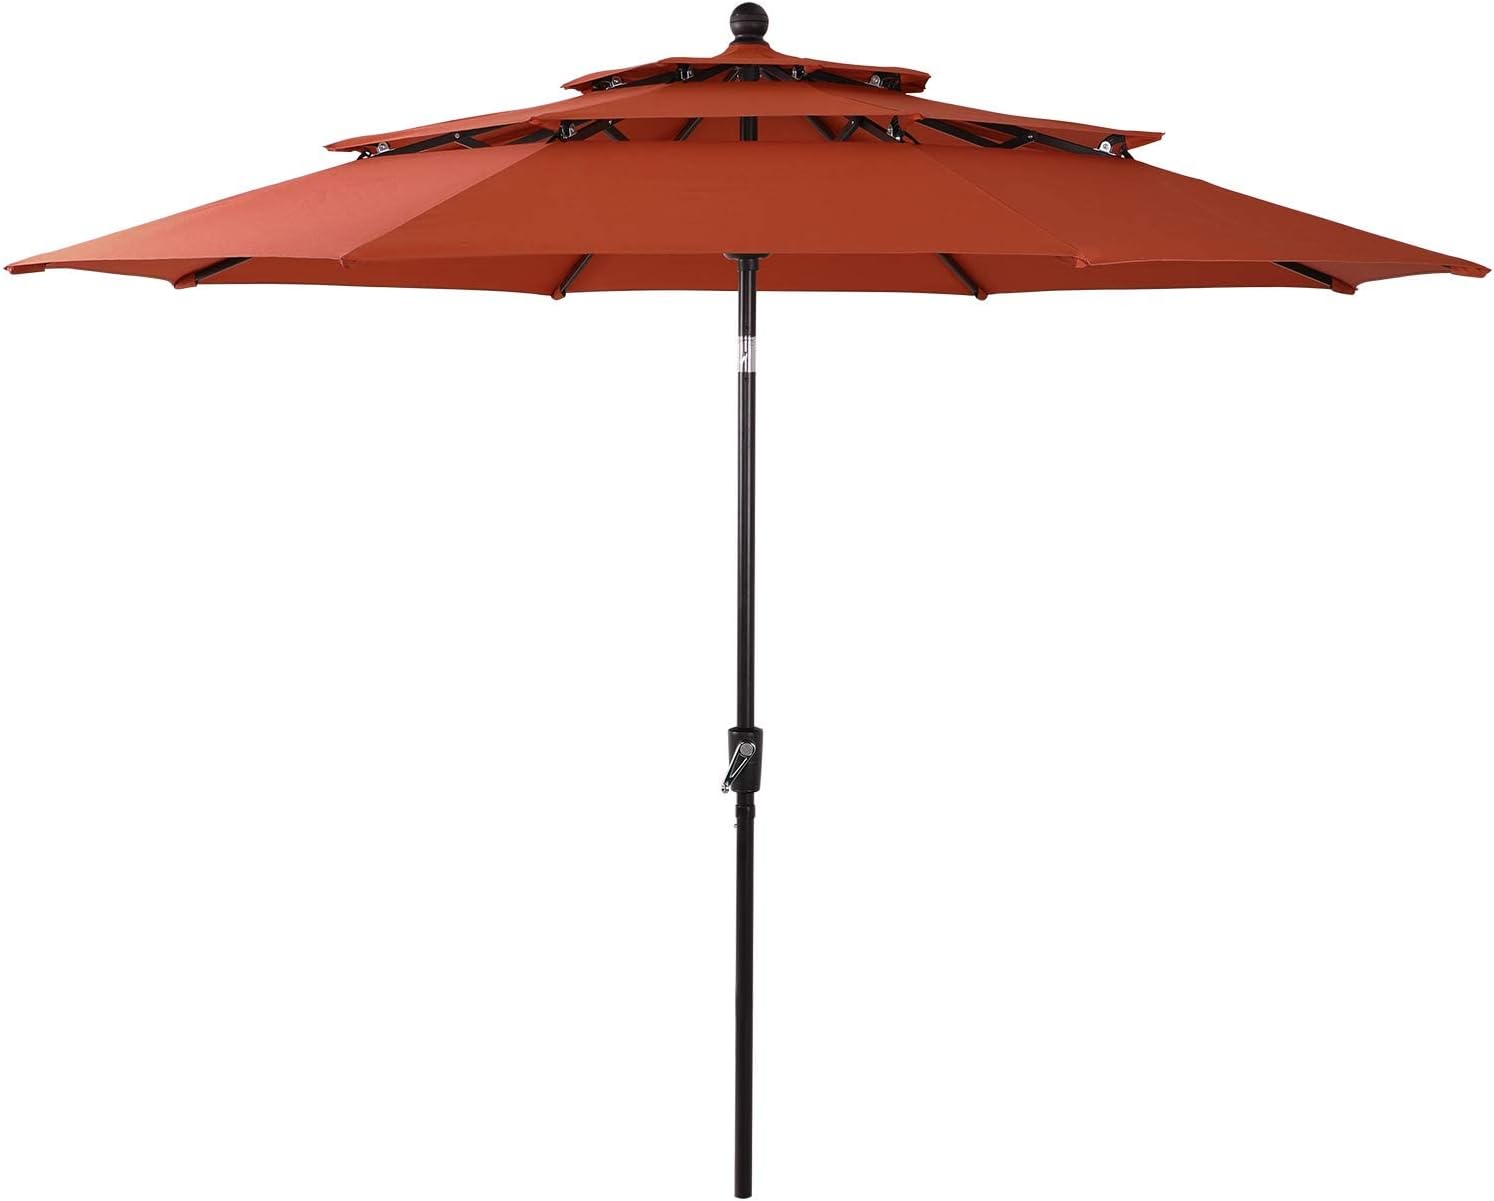 PHI VILLA 10ft 3 Tier Patio Umbrella, Outdoor Market Table Sun Shade Umbrellas for Backyard Deck Poolside, Auto-tilt